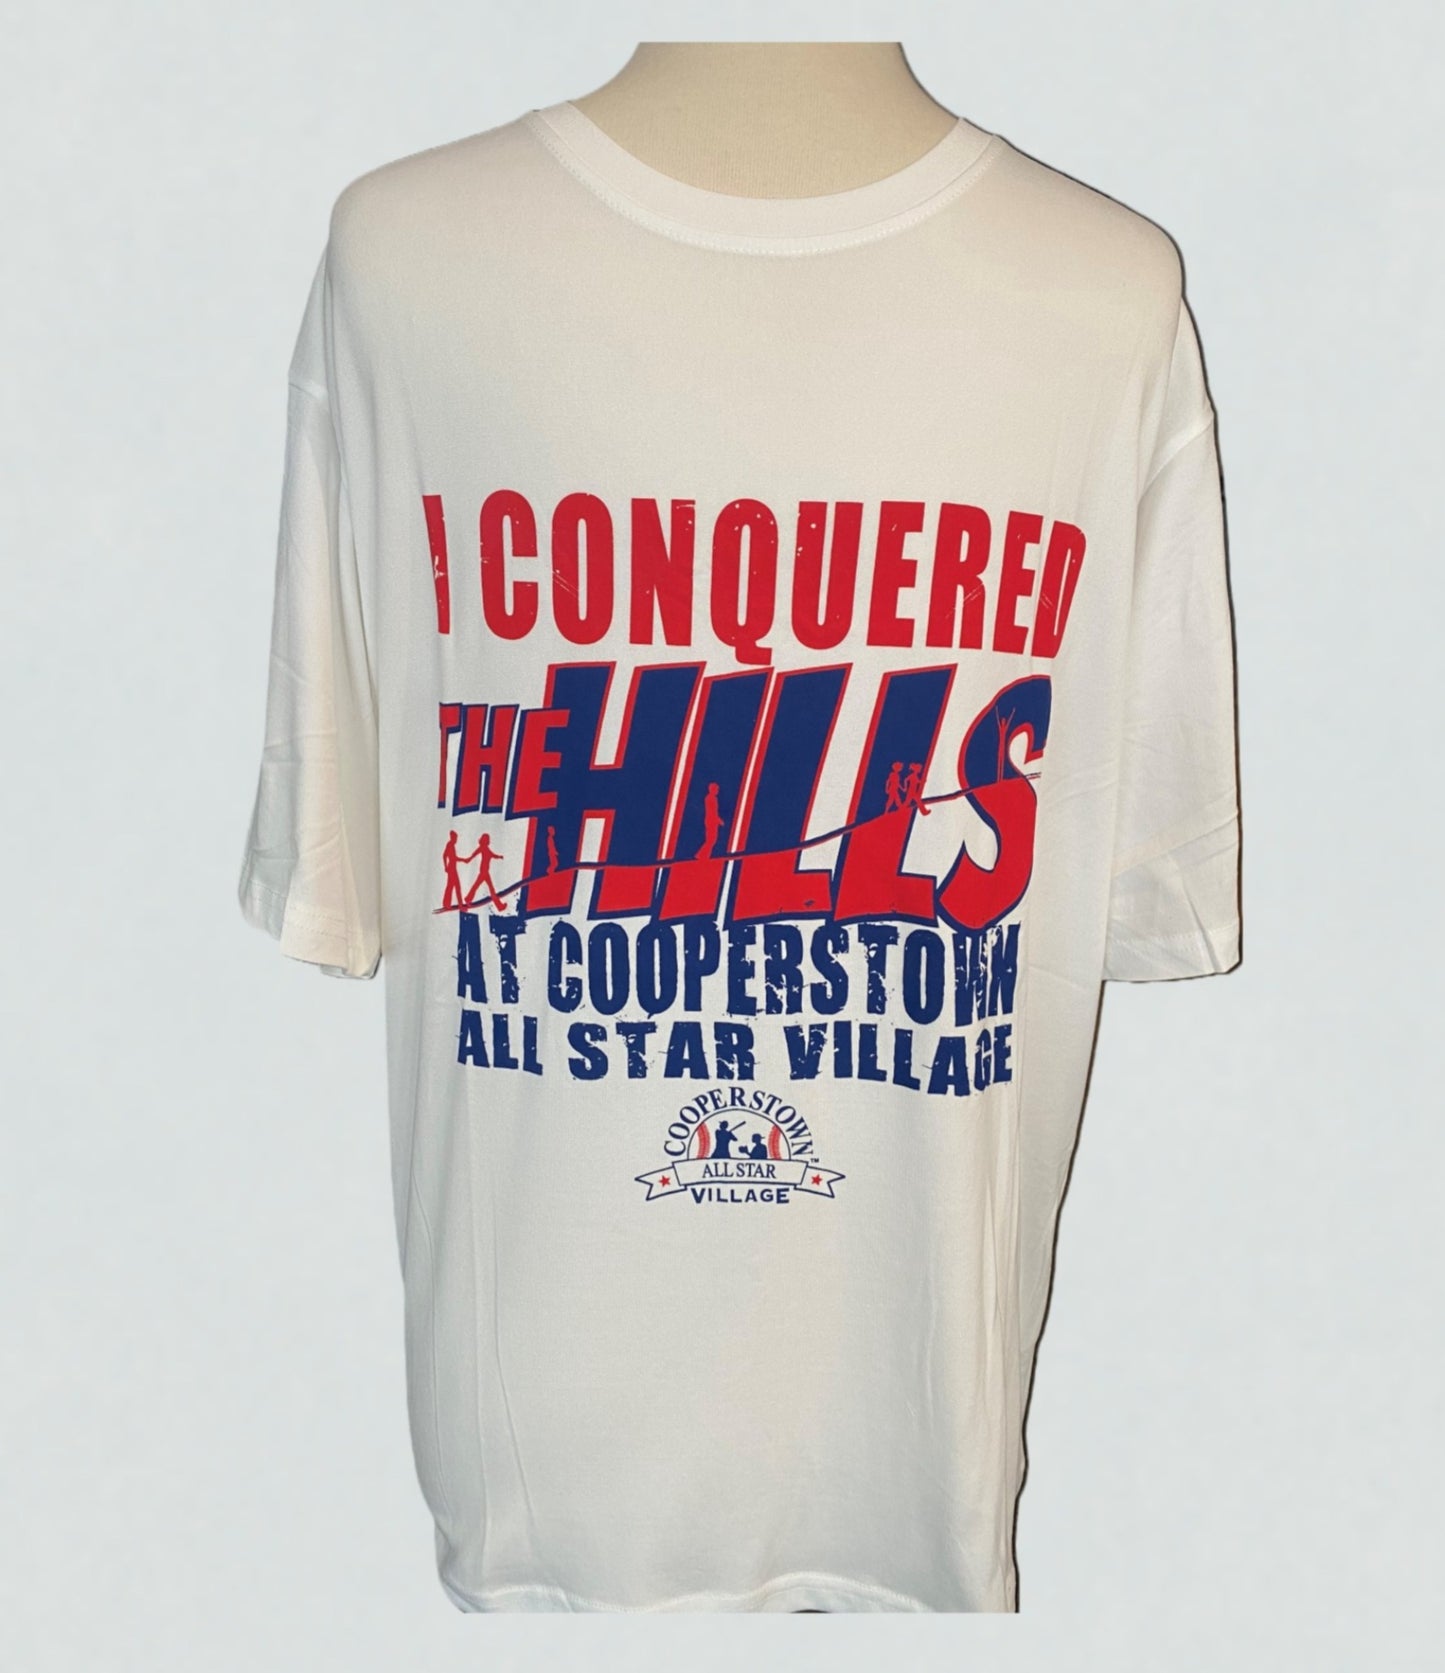 I Conquered The Hills T-Shirt